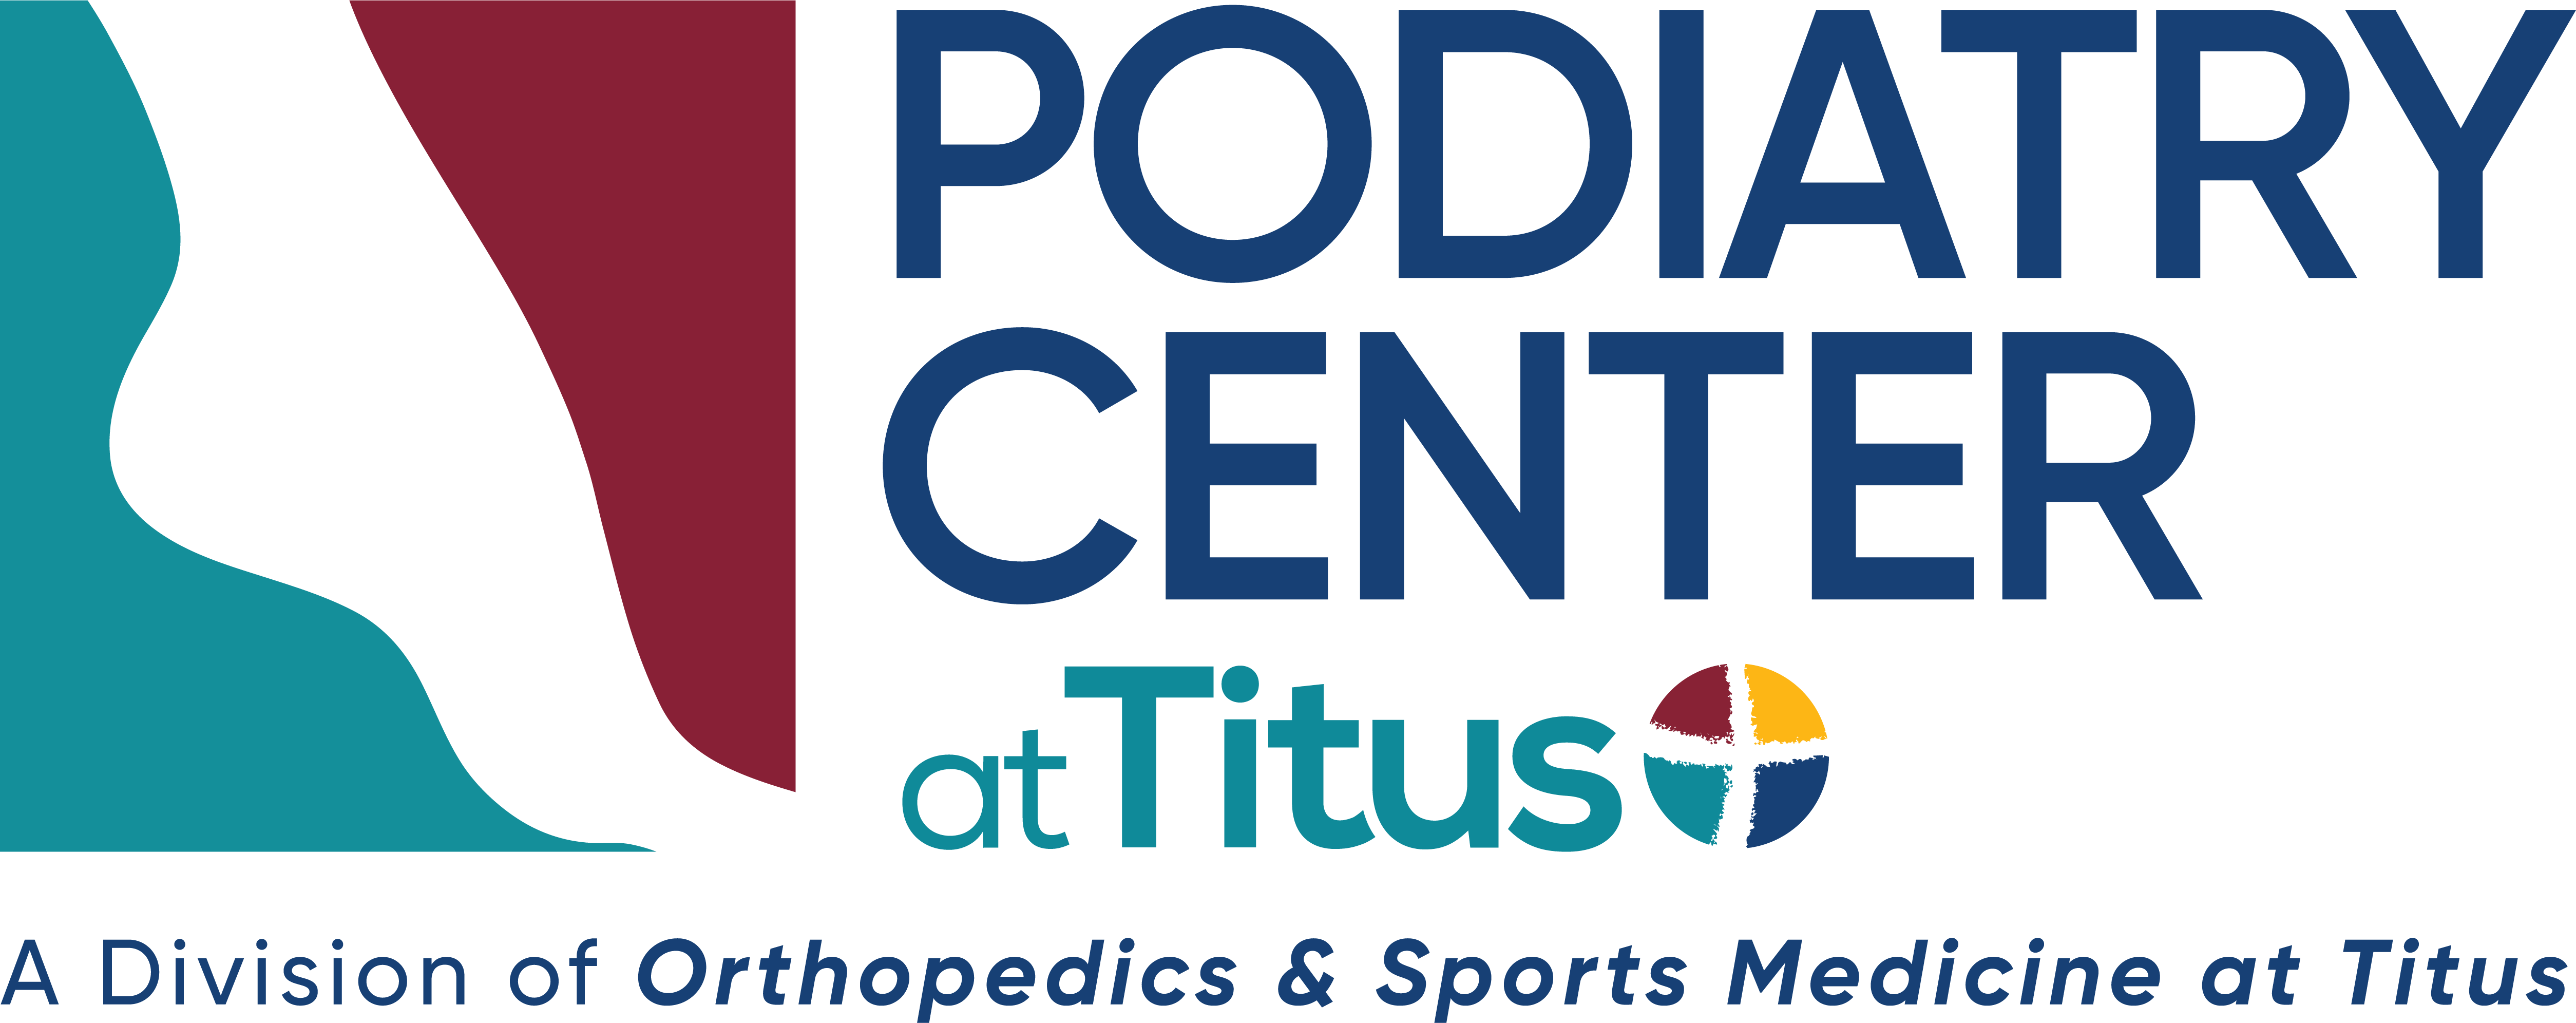 Podiatry Center at Titus